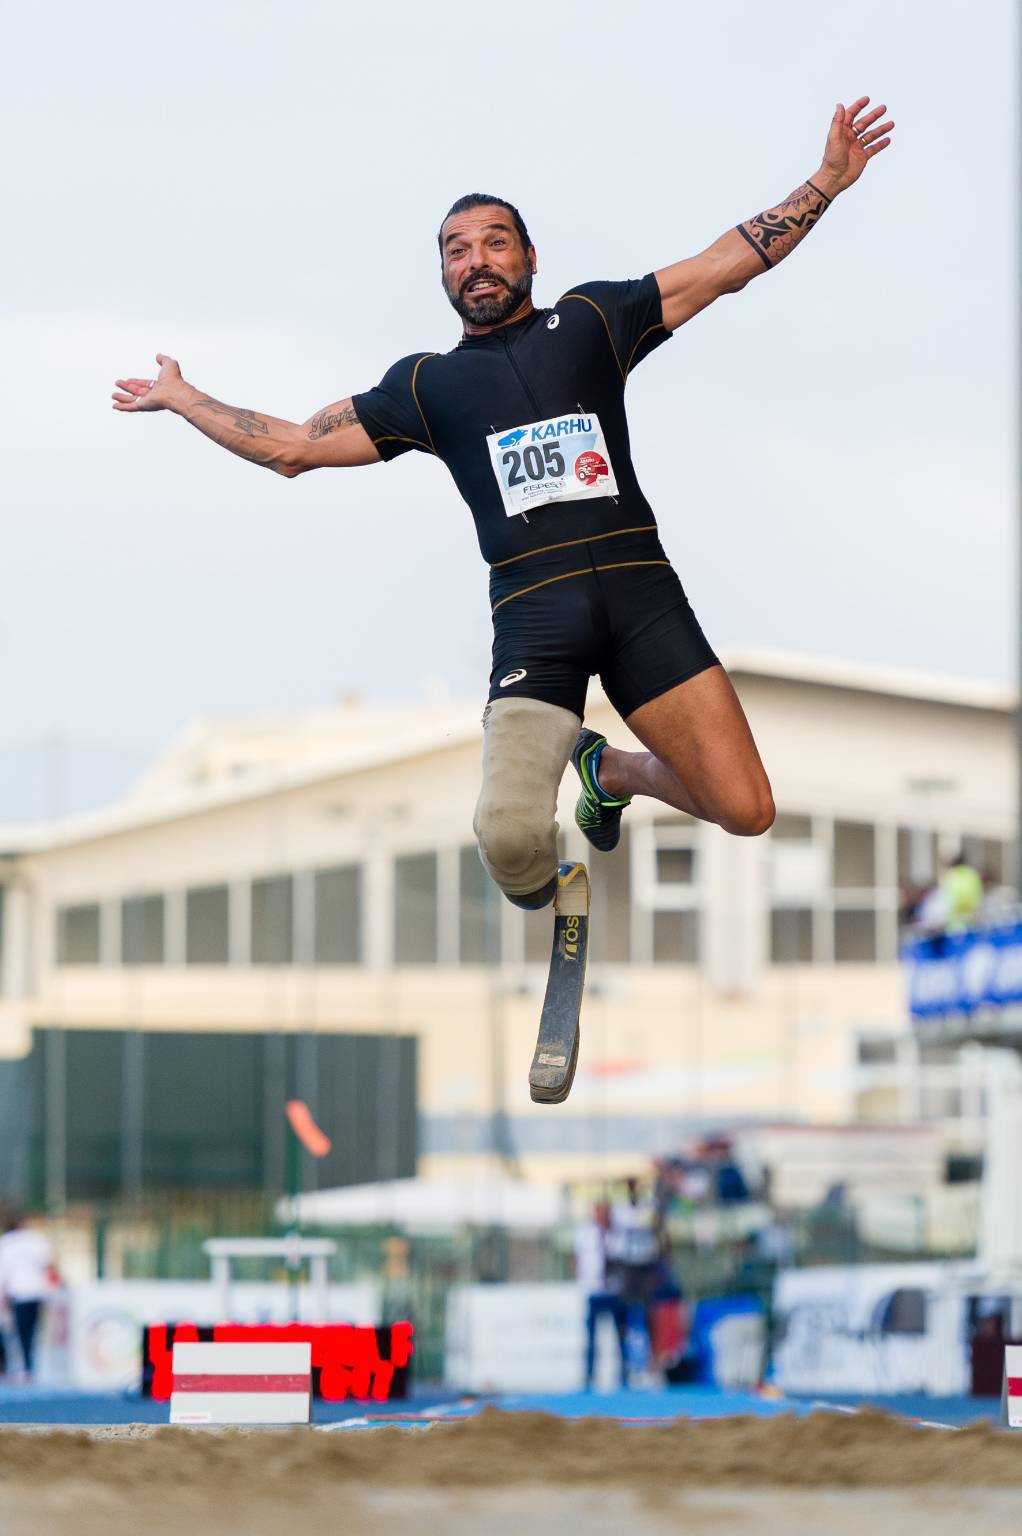 Atletica paralimpica, Marcantognini record mondiale nei 400